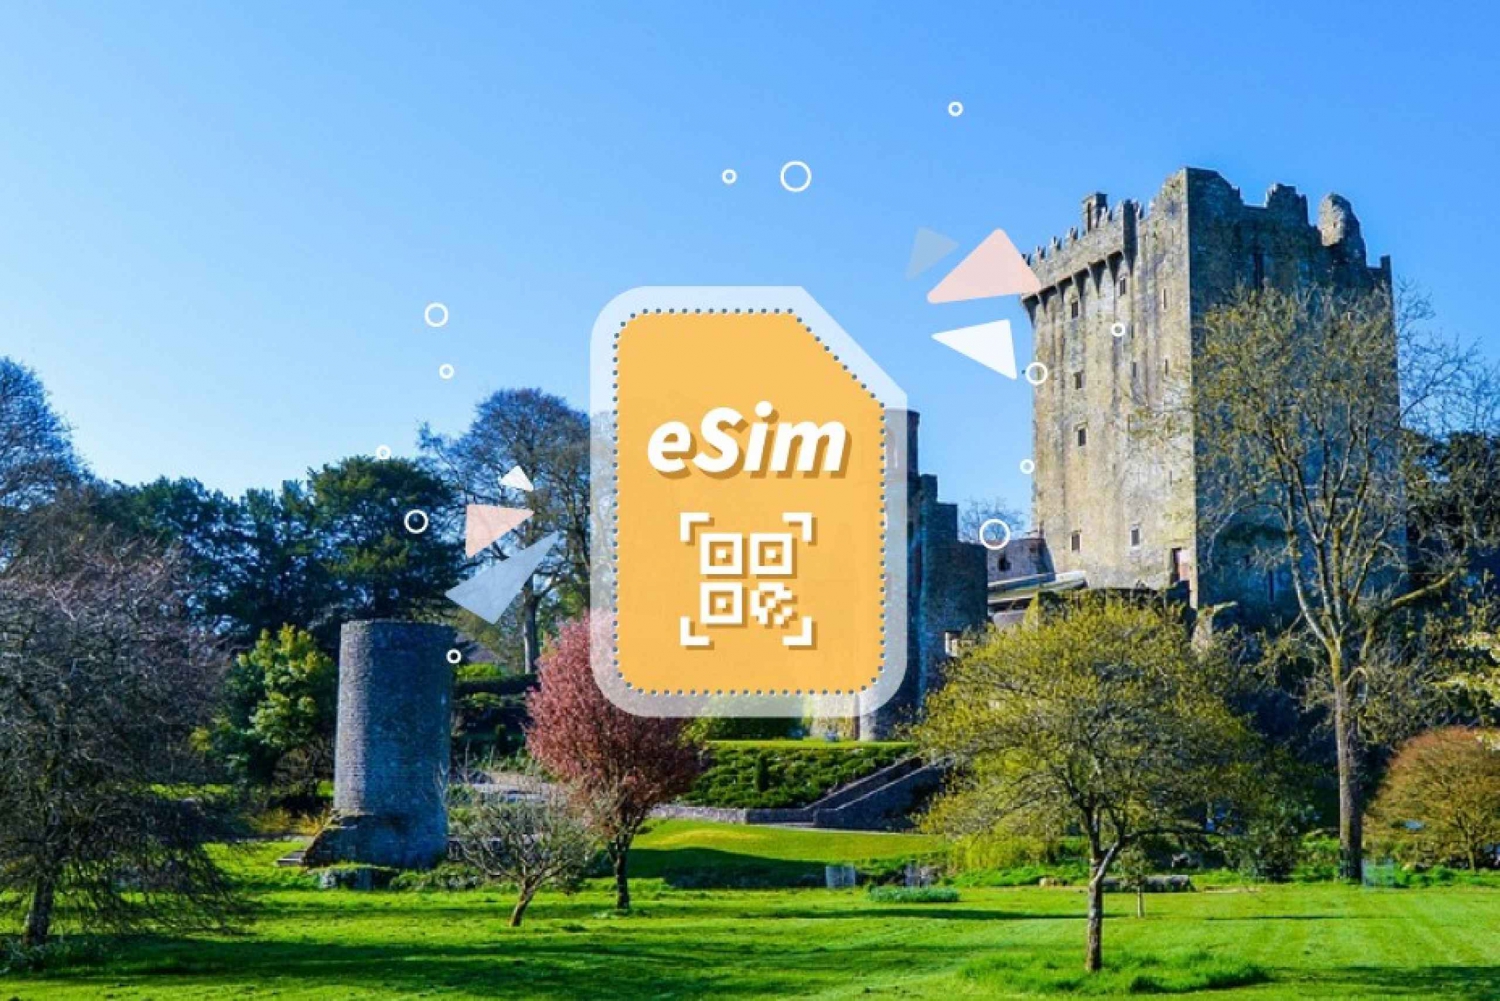 Ierland/Europa: eSim mobiel dataplan